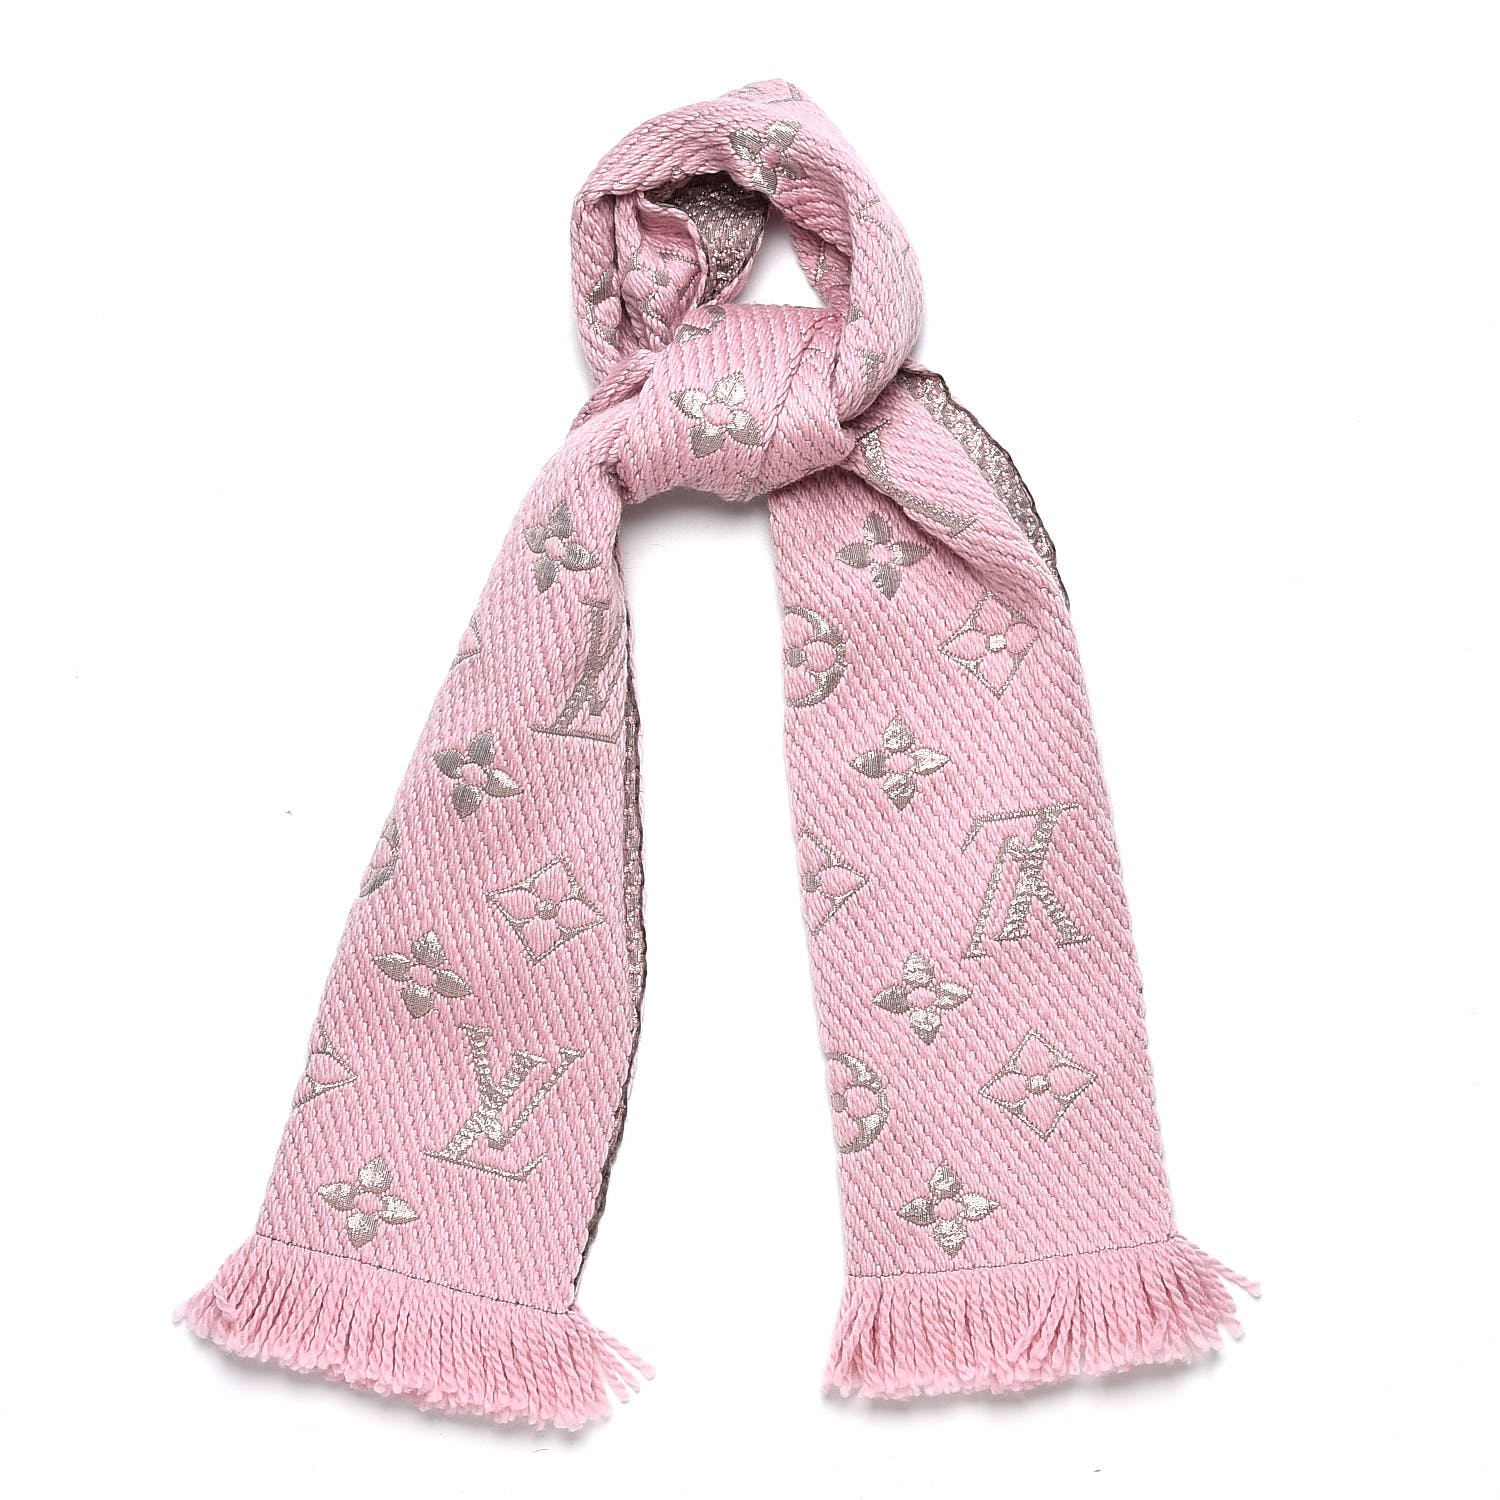 LOUIS VUITTON Wool Silk Logomania Shine Scarf Pink 248738